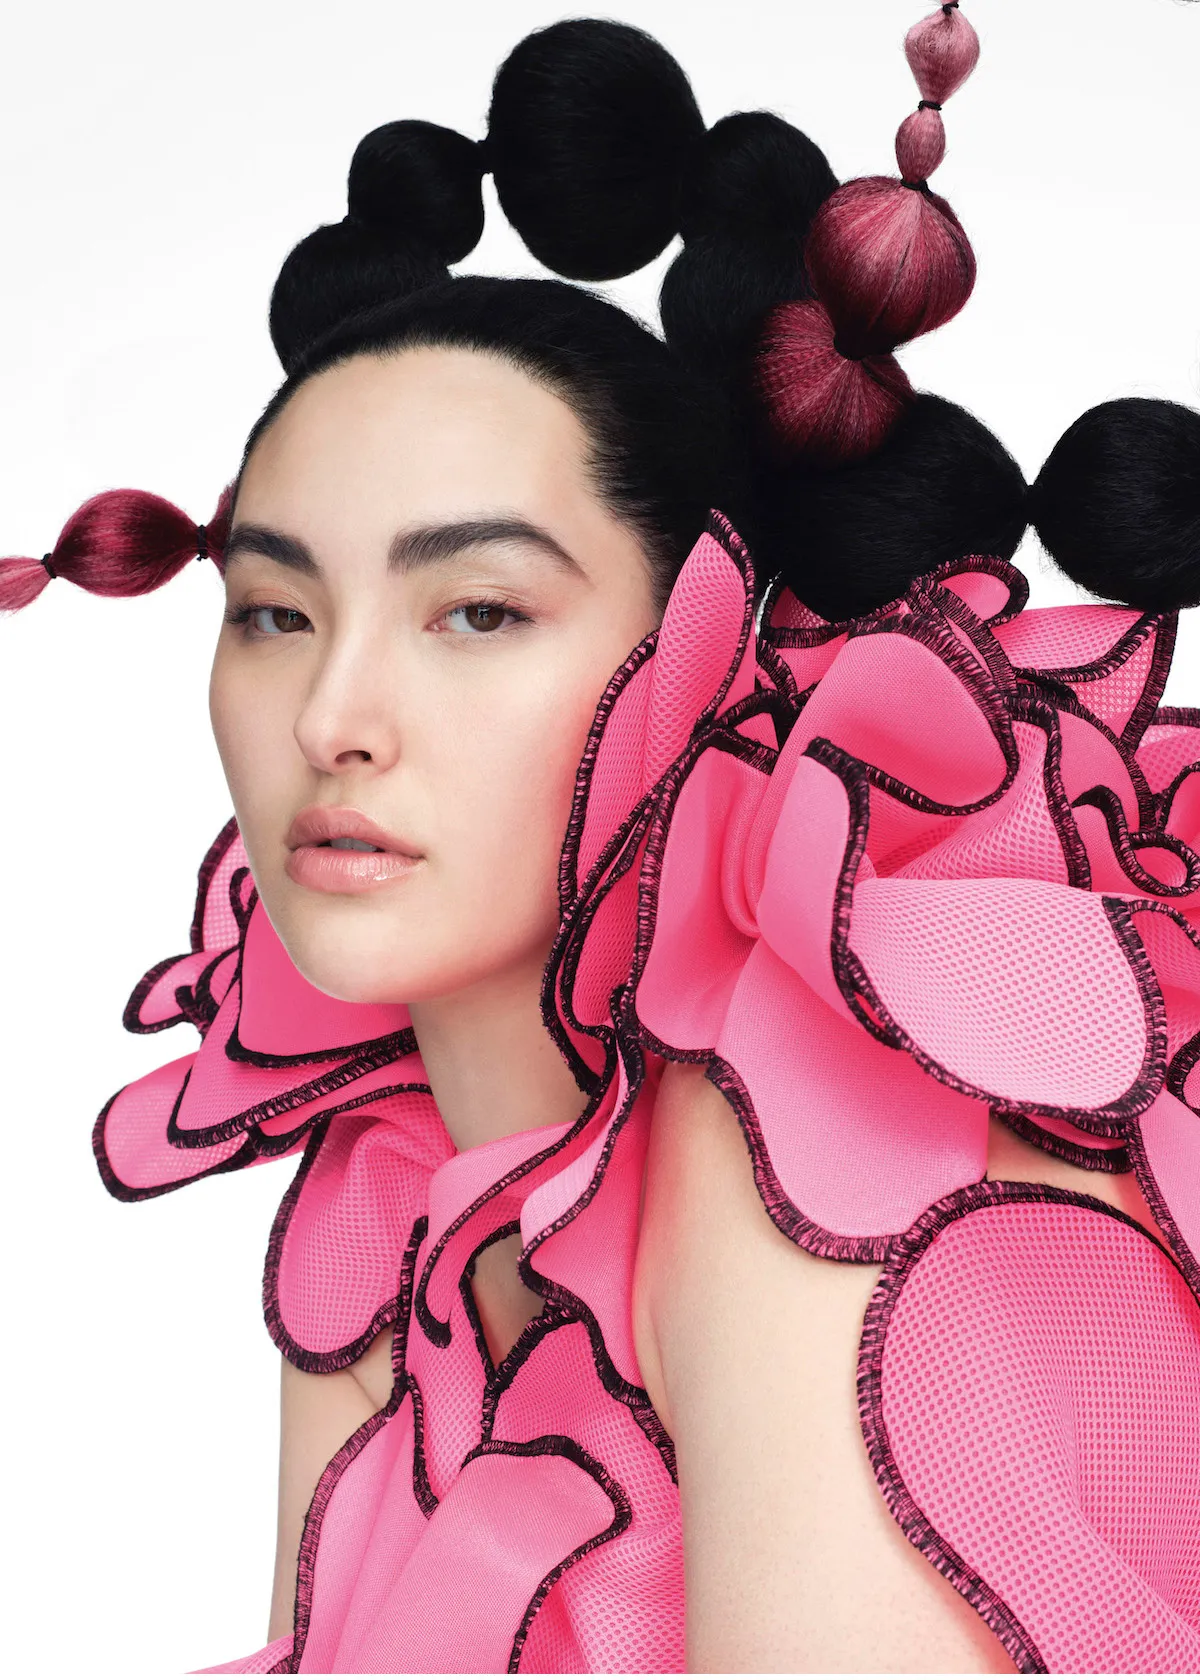 Yumi Nu covers Vogue Japan April 2022 by Nathaniel Goldberg